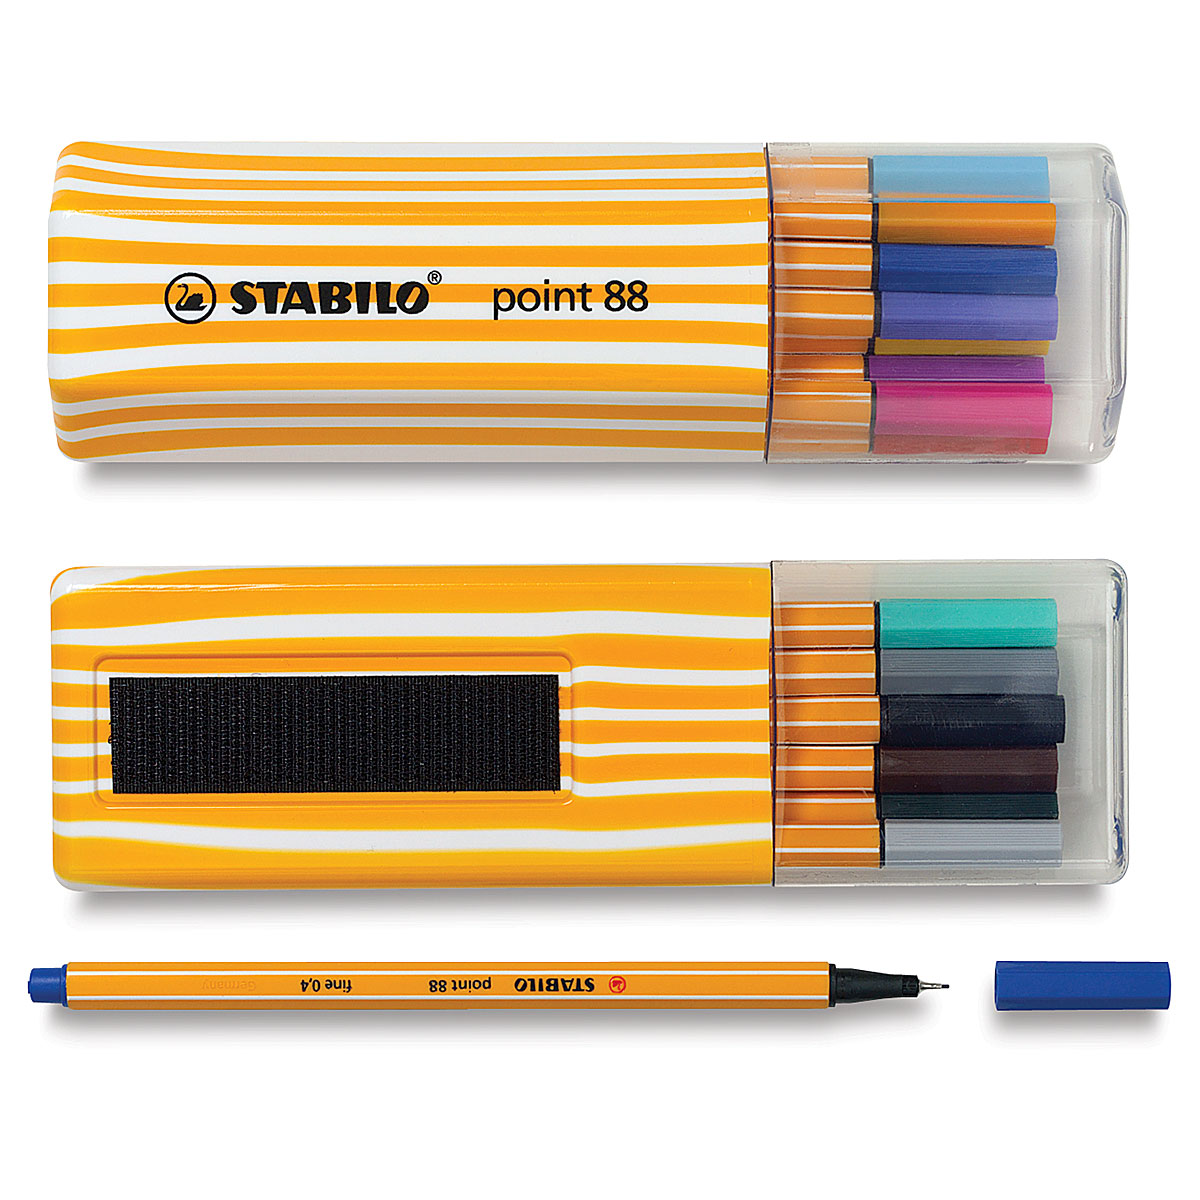 Stabilo Point 88 Pen Set - Assorted Colors, Twin Pack, Set of 20| Utrecht